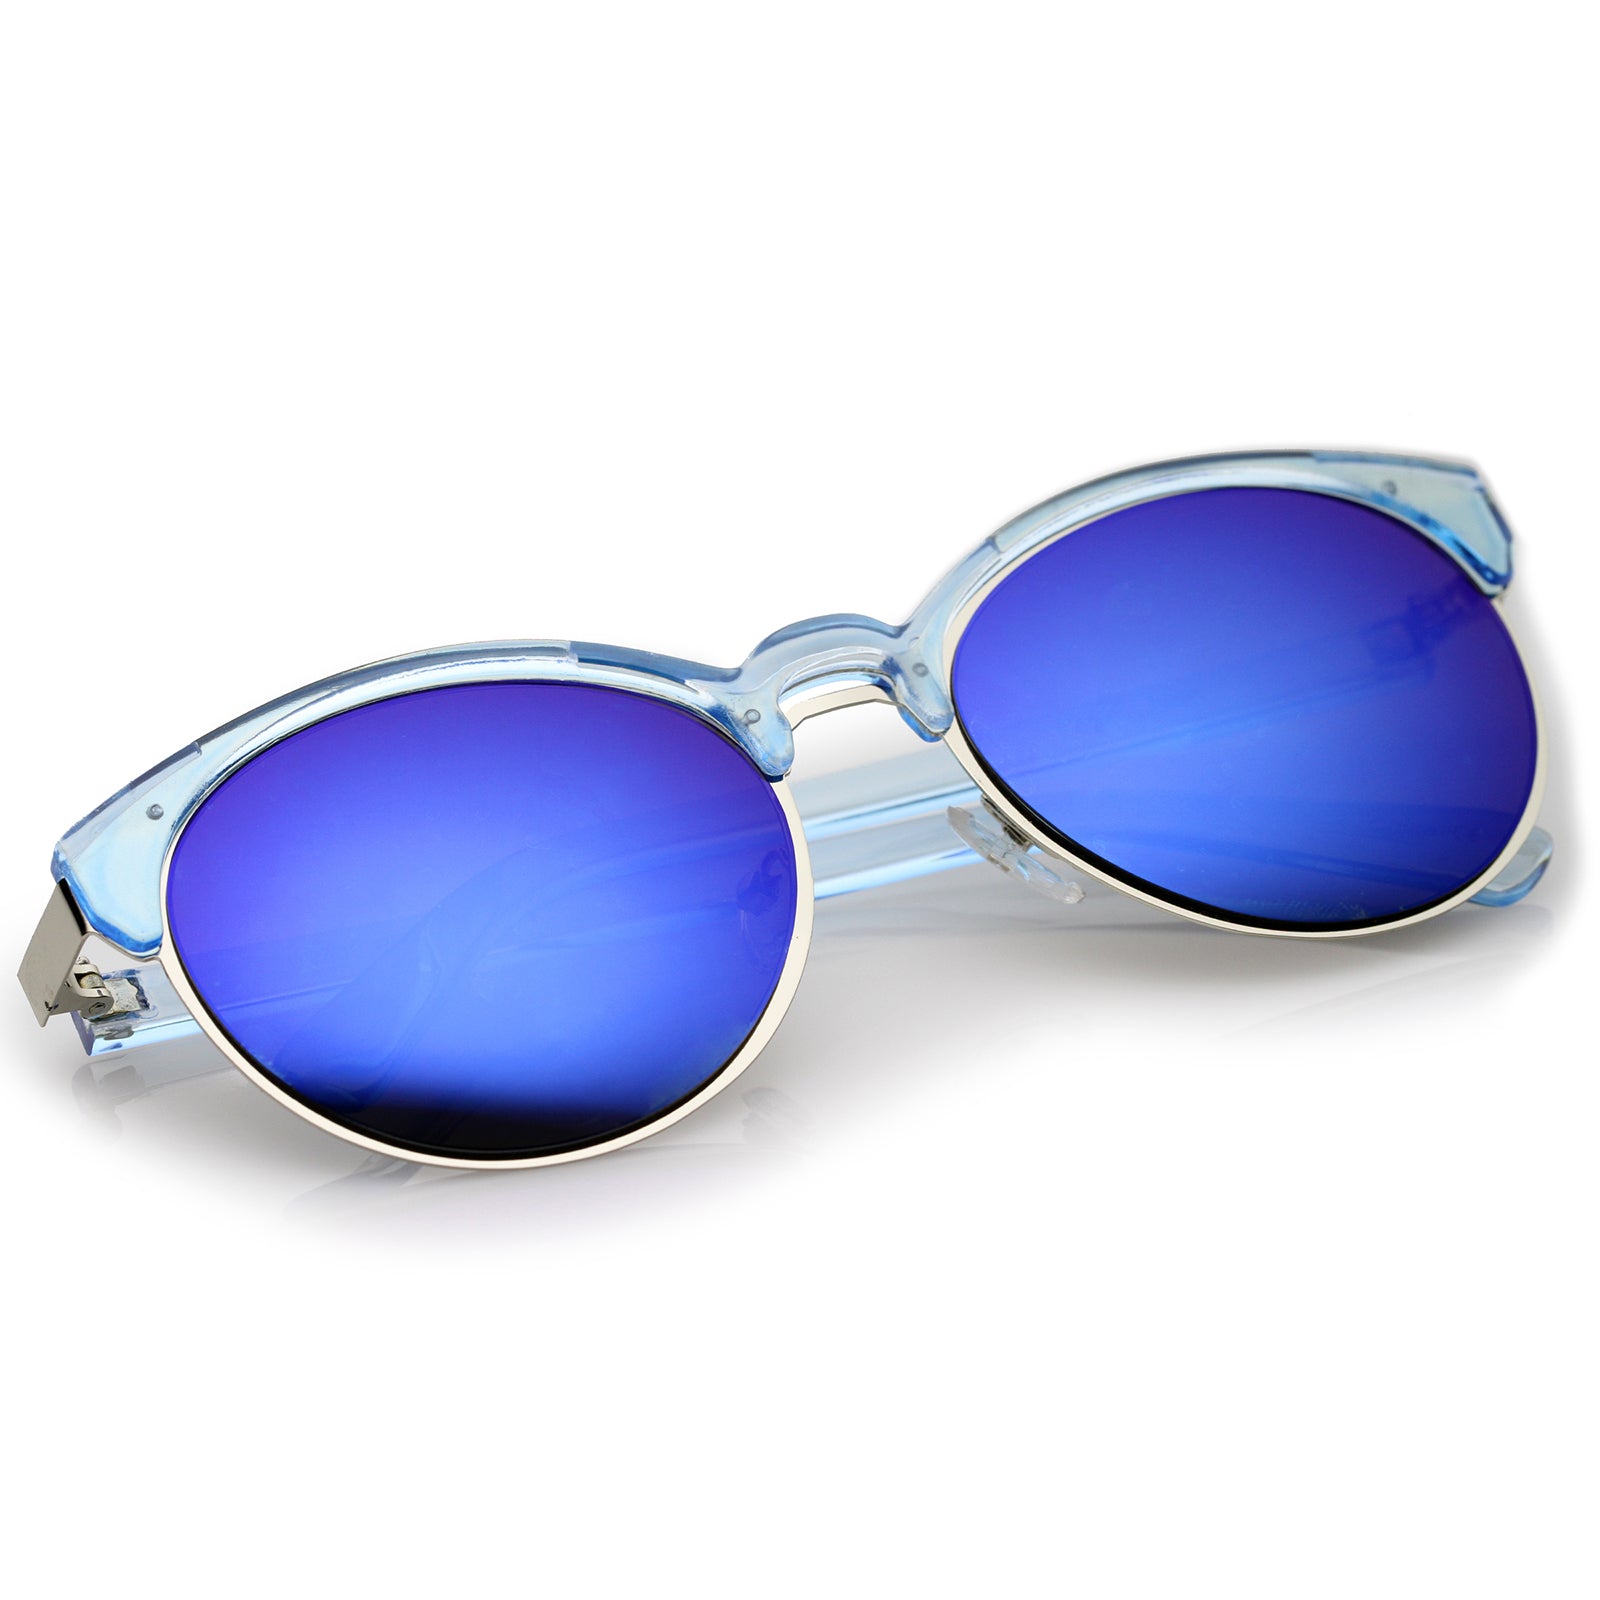 Double Nose Bridge Metal Trim Mirror Lens Round Cat Eye Sunglasses 55mm, Blue-Silver / Blue Mirror